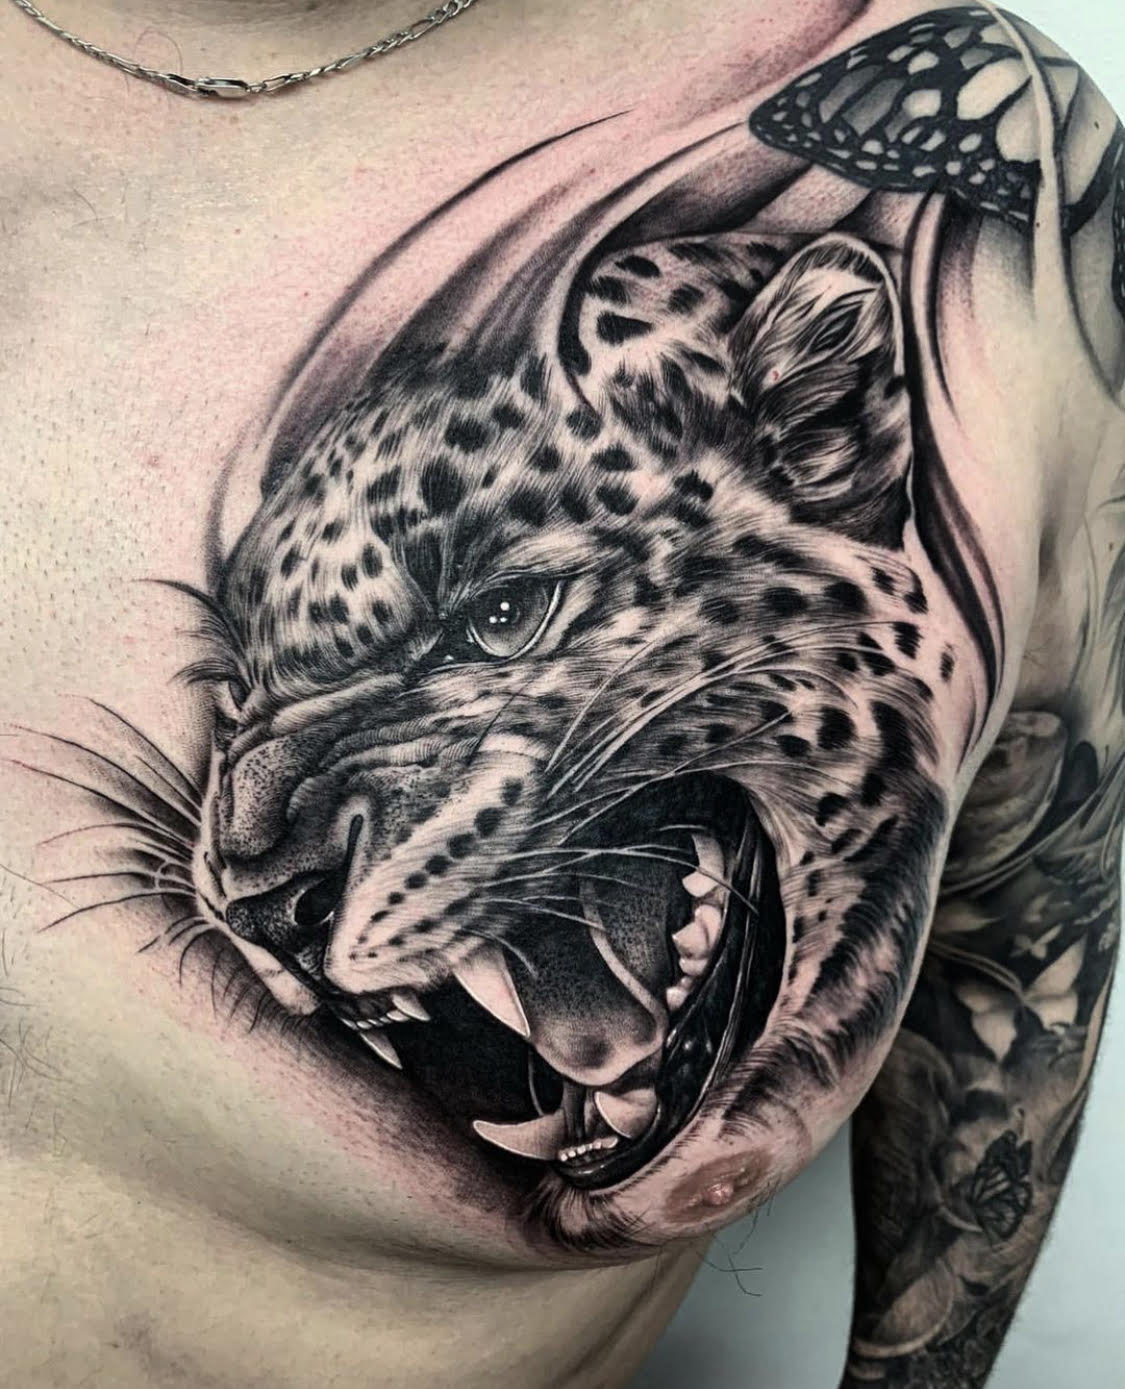 Snow Leopard tattoo on Shoulder - Best Tattoo Ideas Gallery